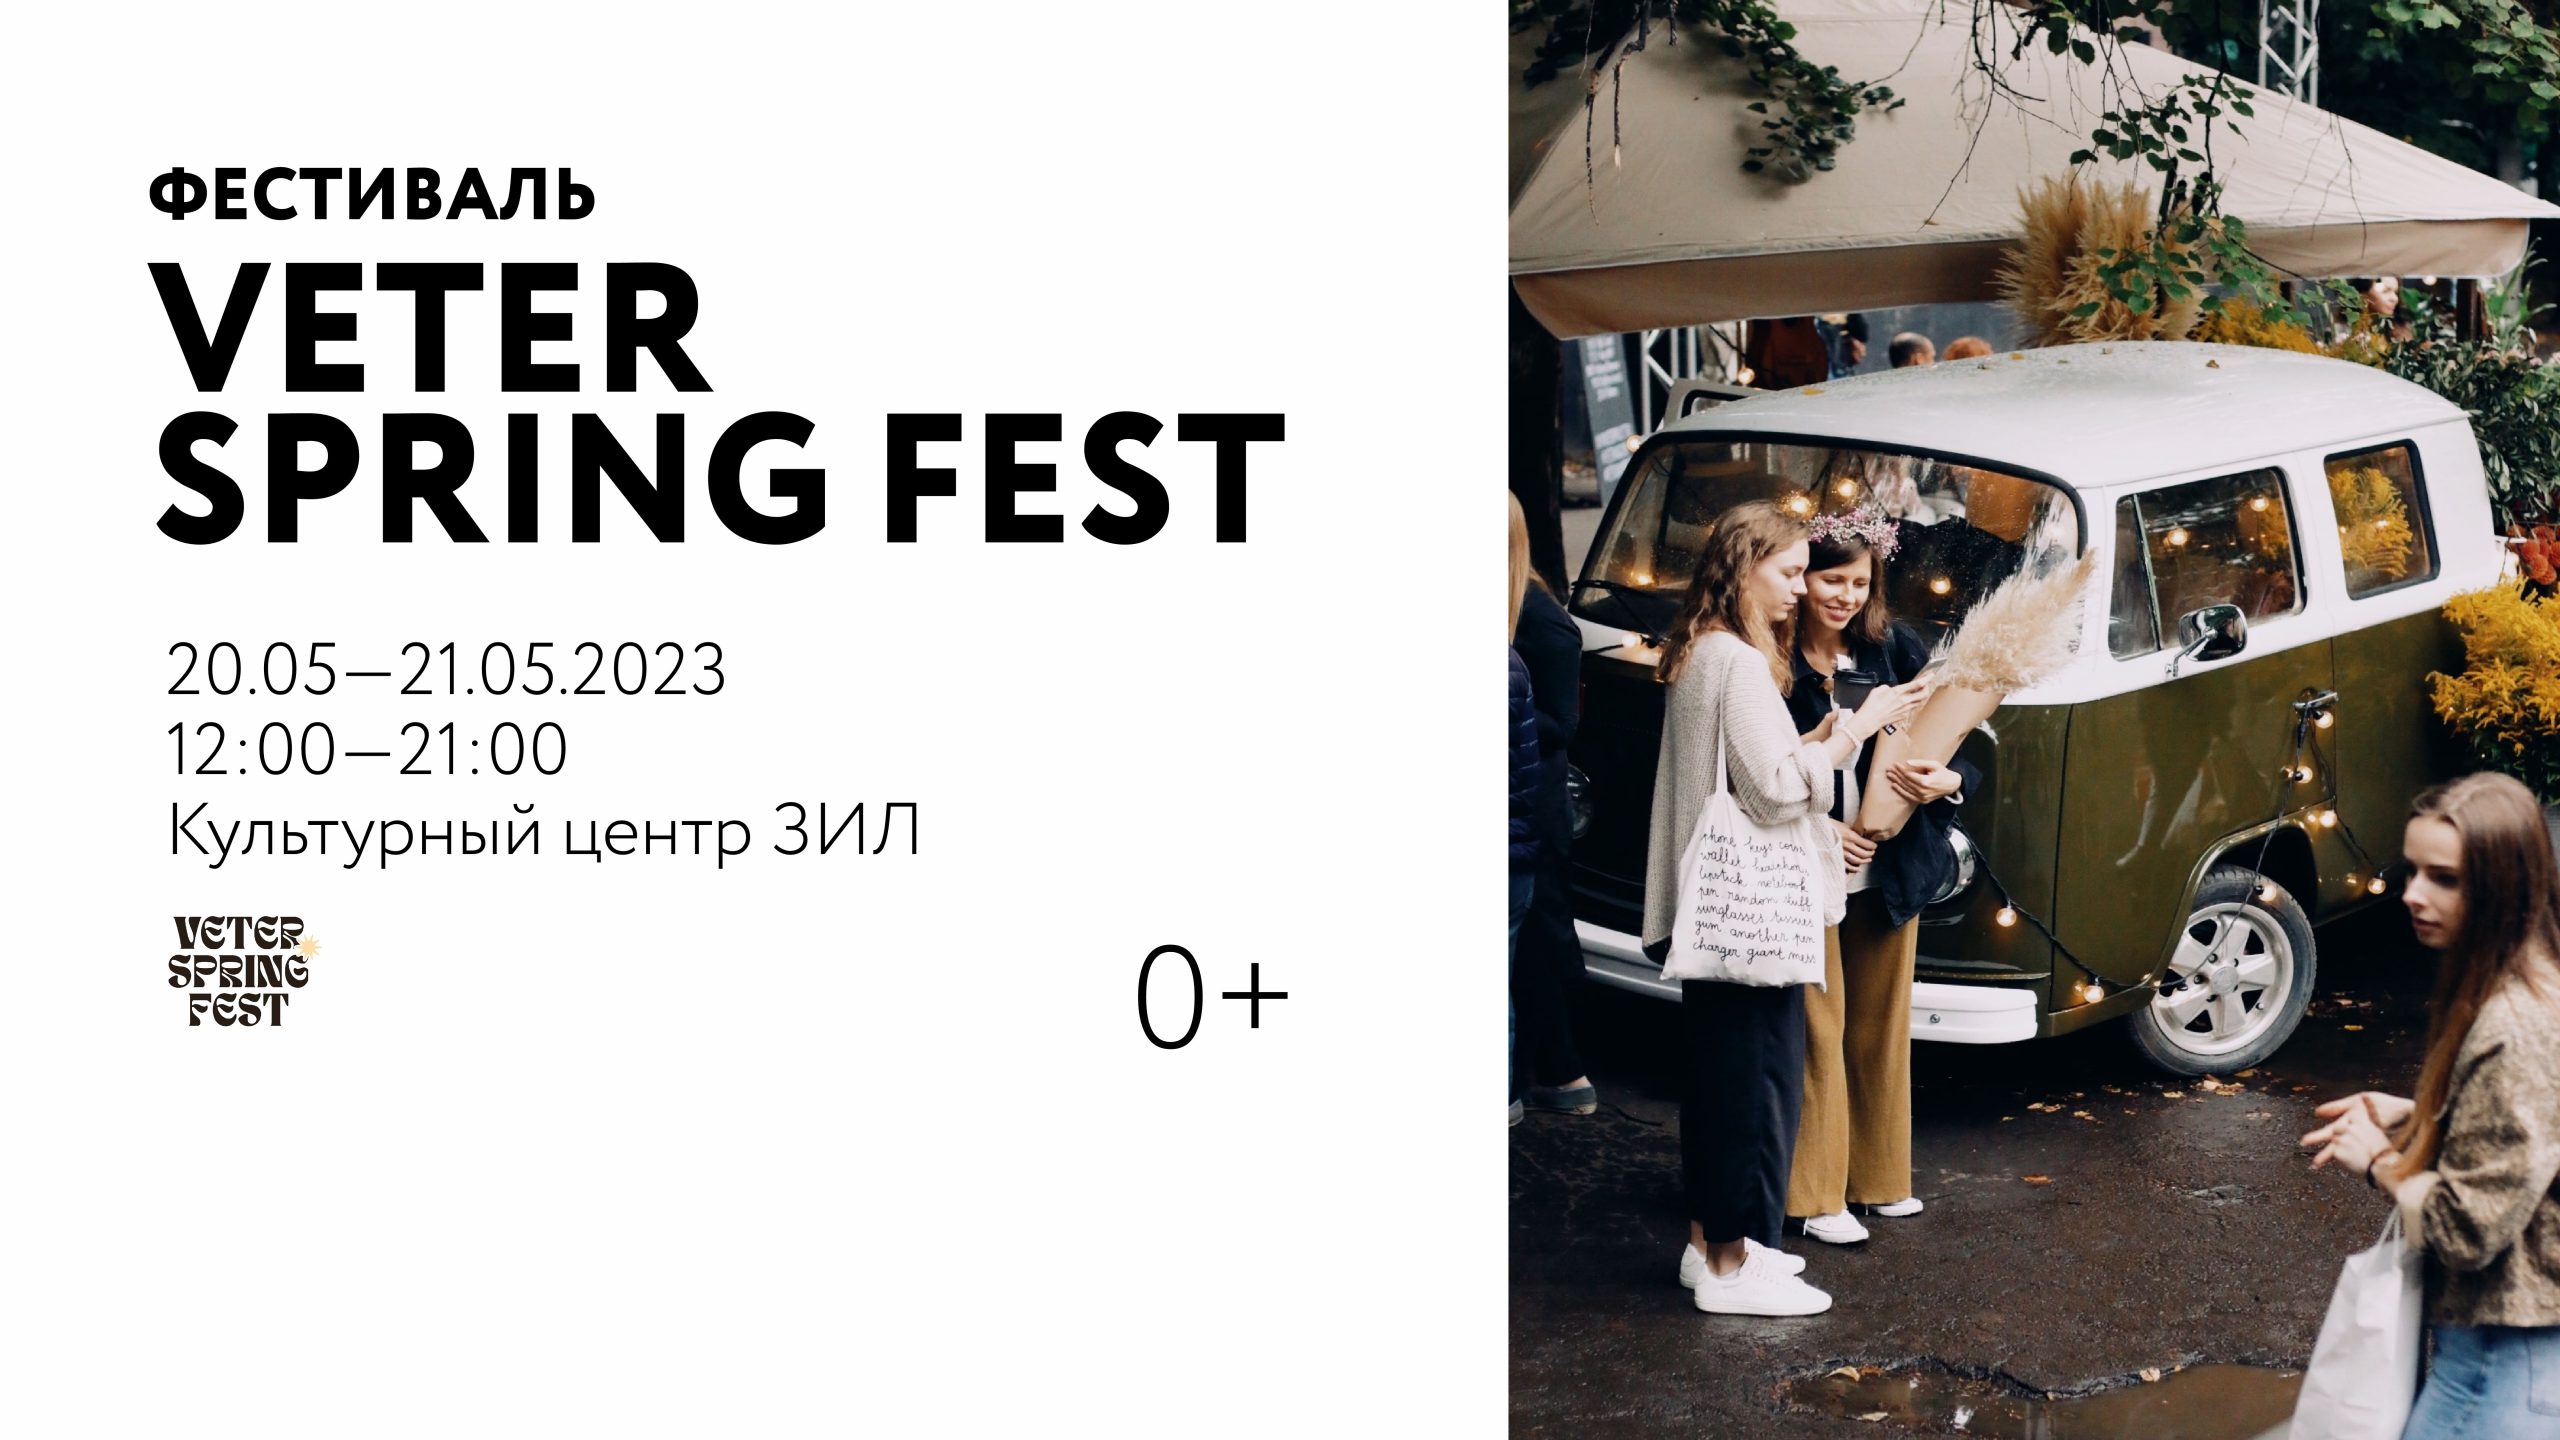 Фестиваль Veter Spring Fest